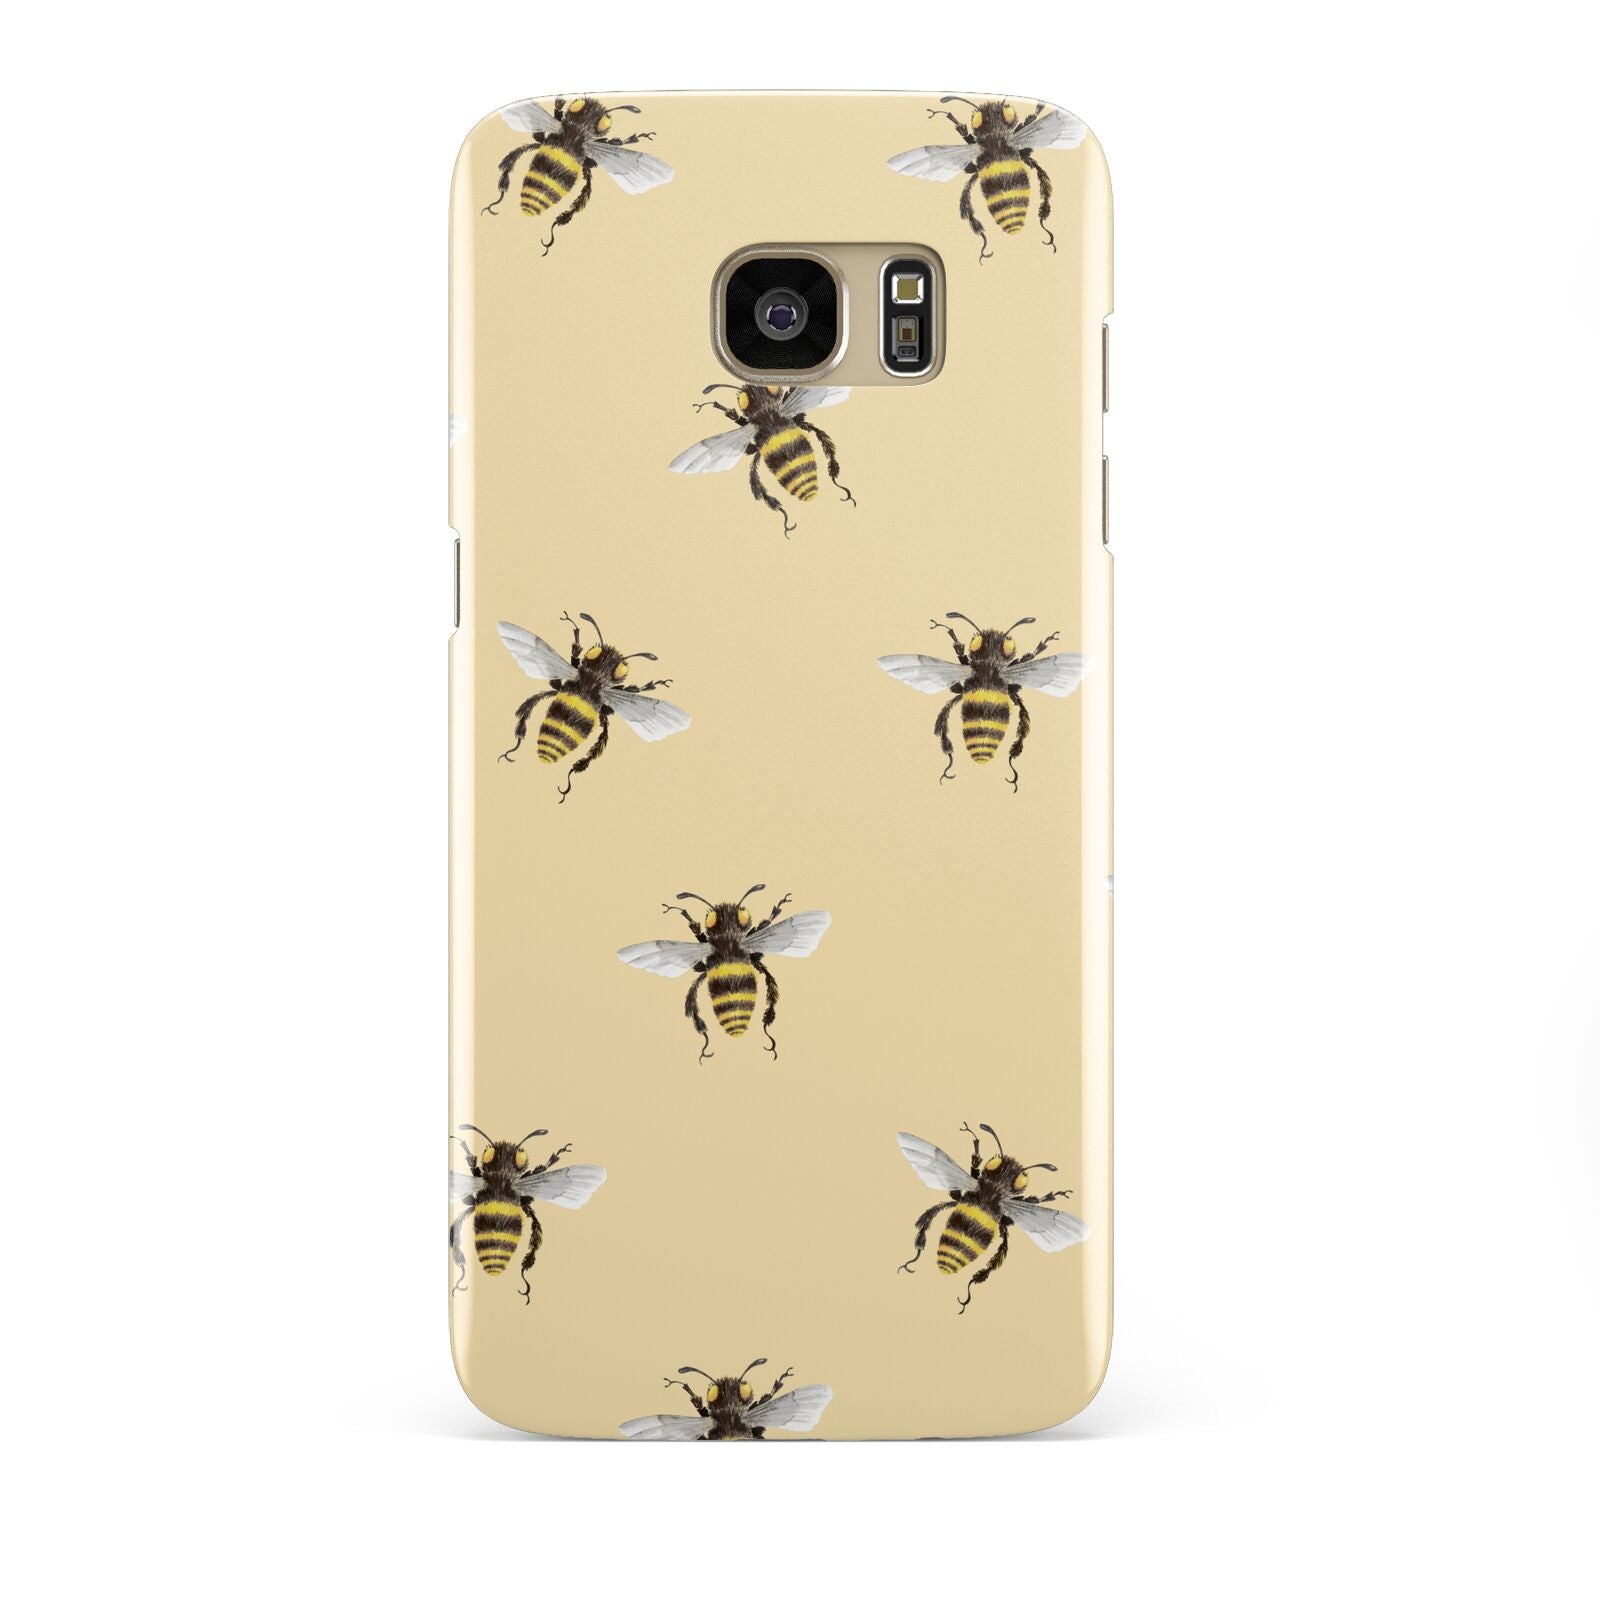 Bee Illustrations Samsung Galaxy S7 Edge Case